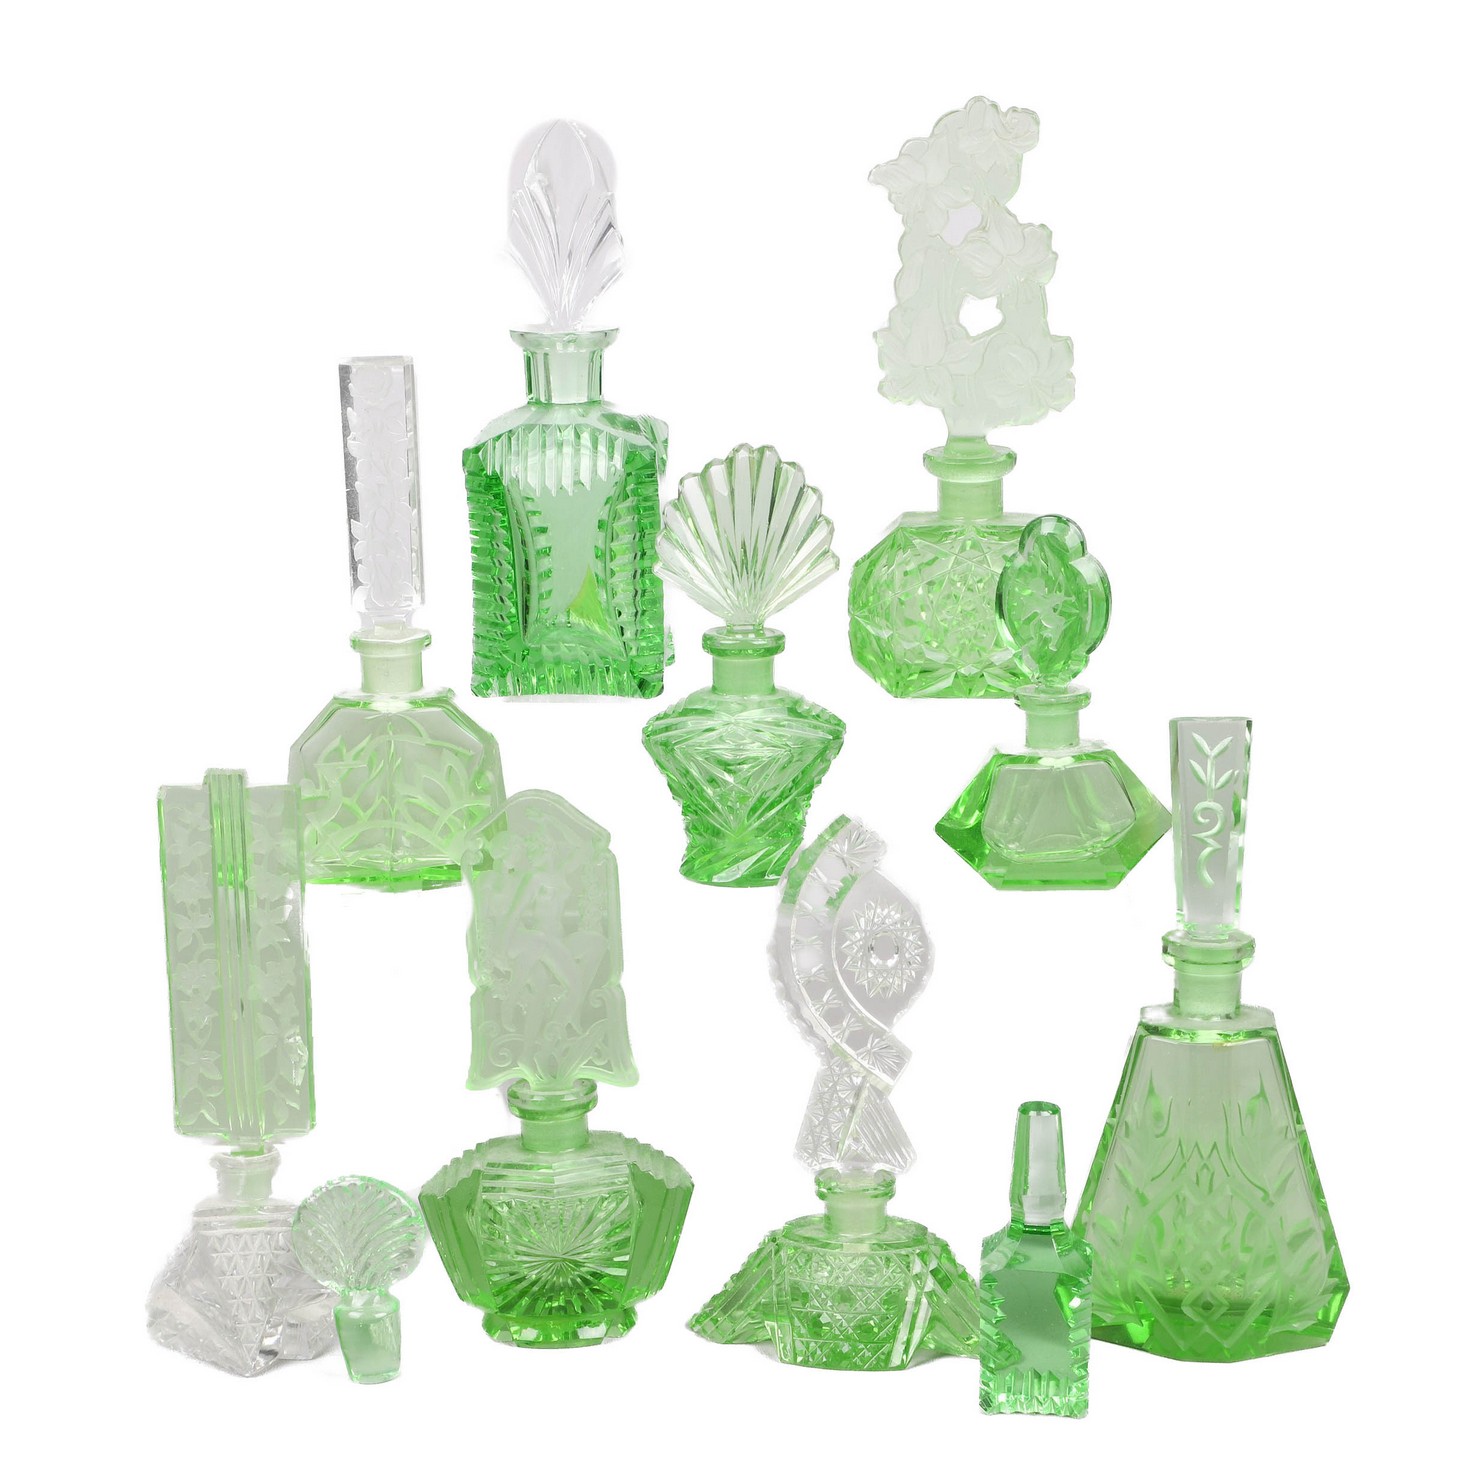  9 Green crystal scent bottles  317e8b